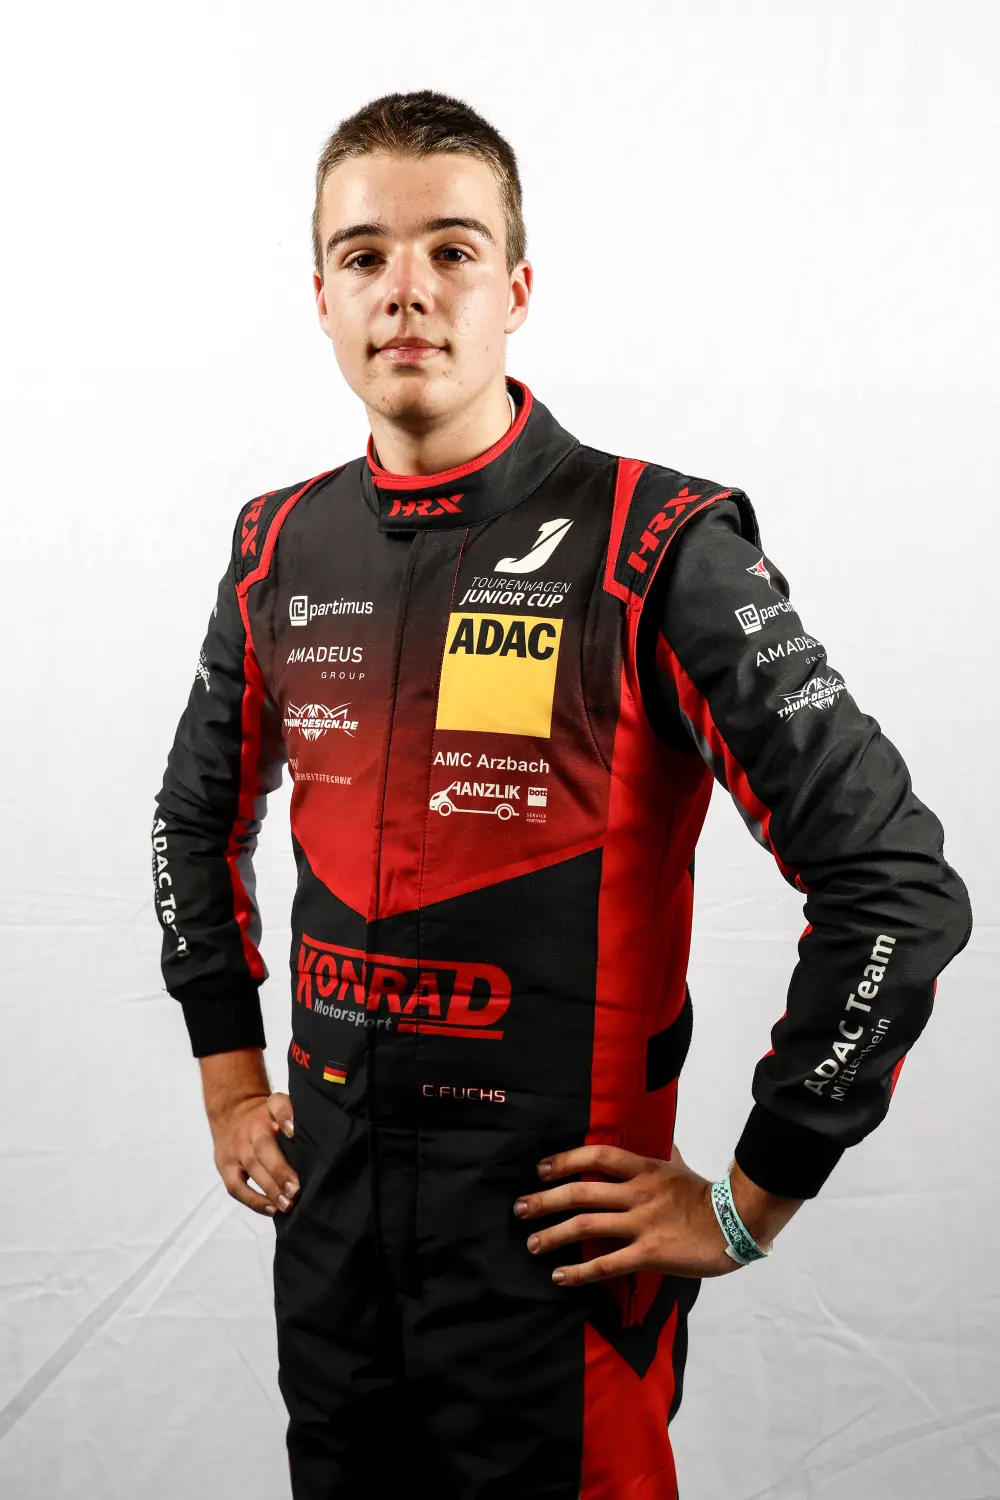 Cedric Fuchs- KONRAD Motorsport